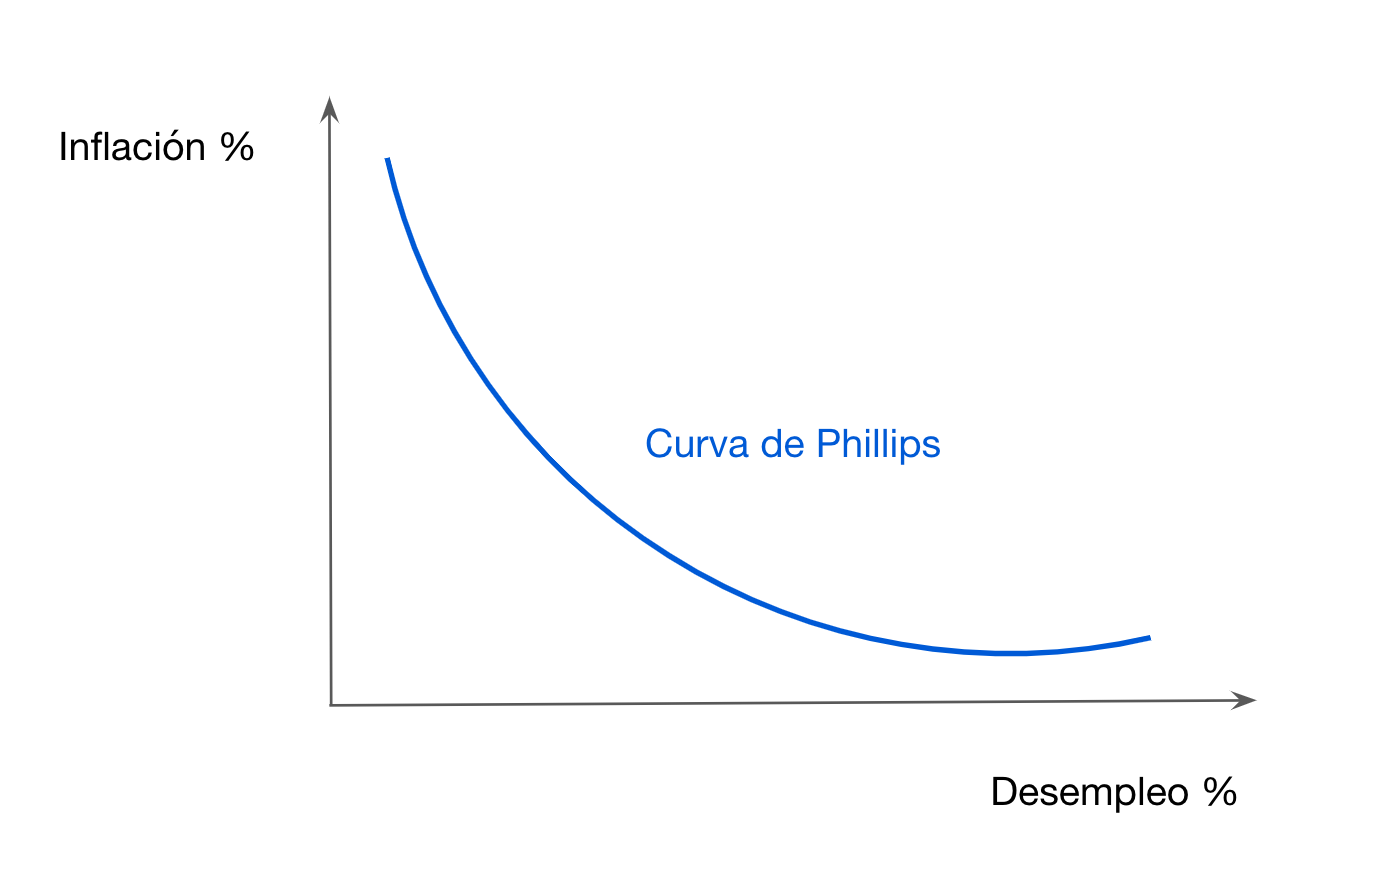 Curva de Phillips